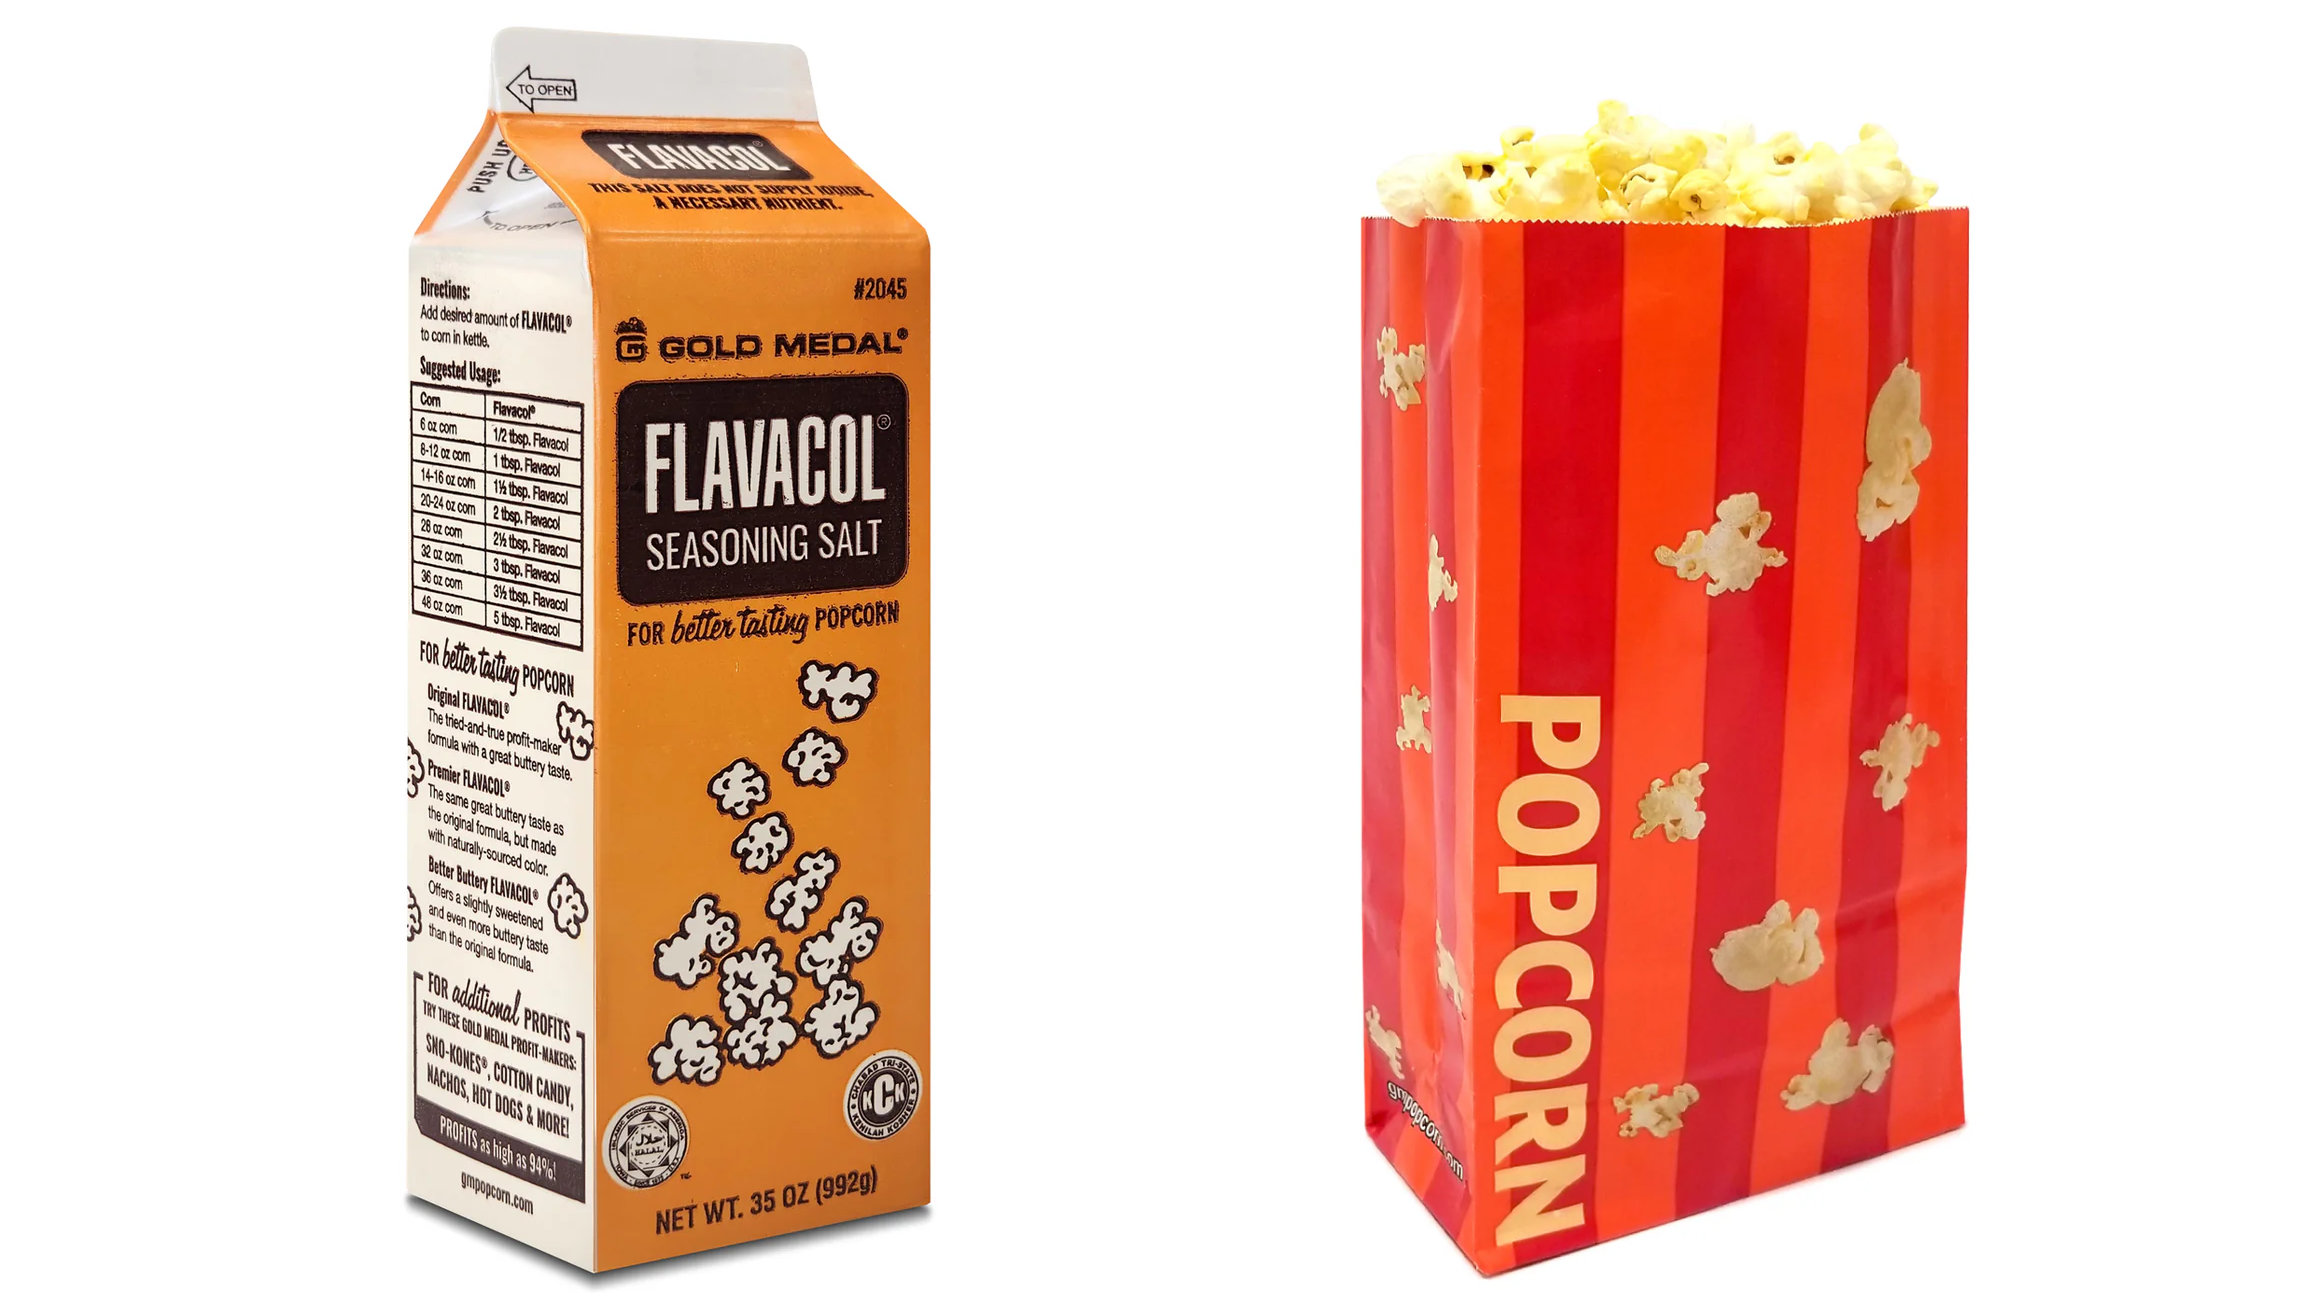 Flavacol next to some popcorn.